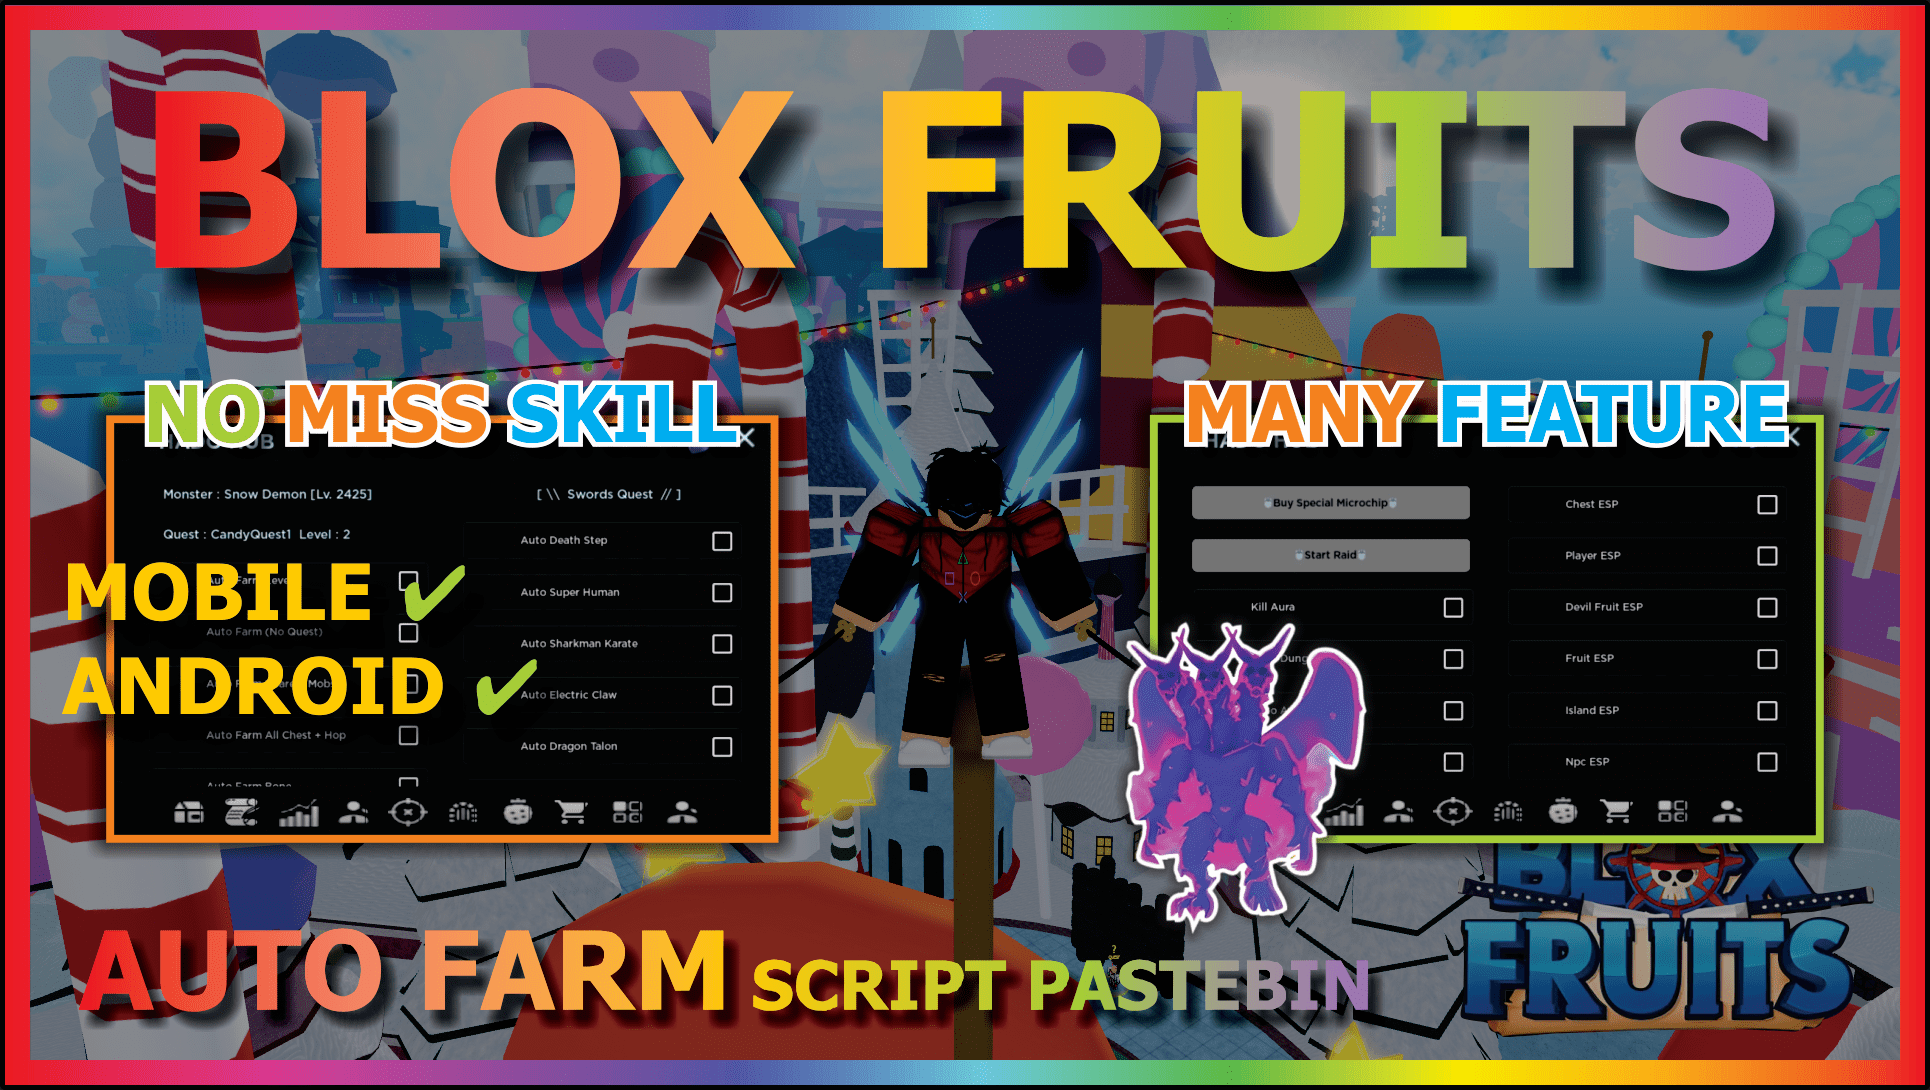 arceus x script blox fruits – Page 15 – ScriptPastebin